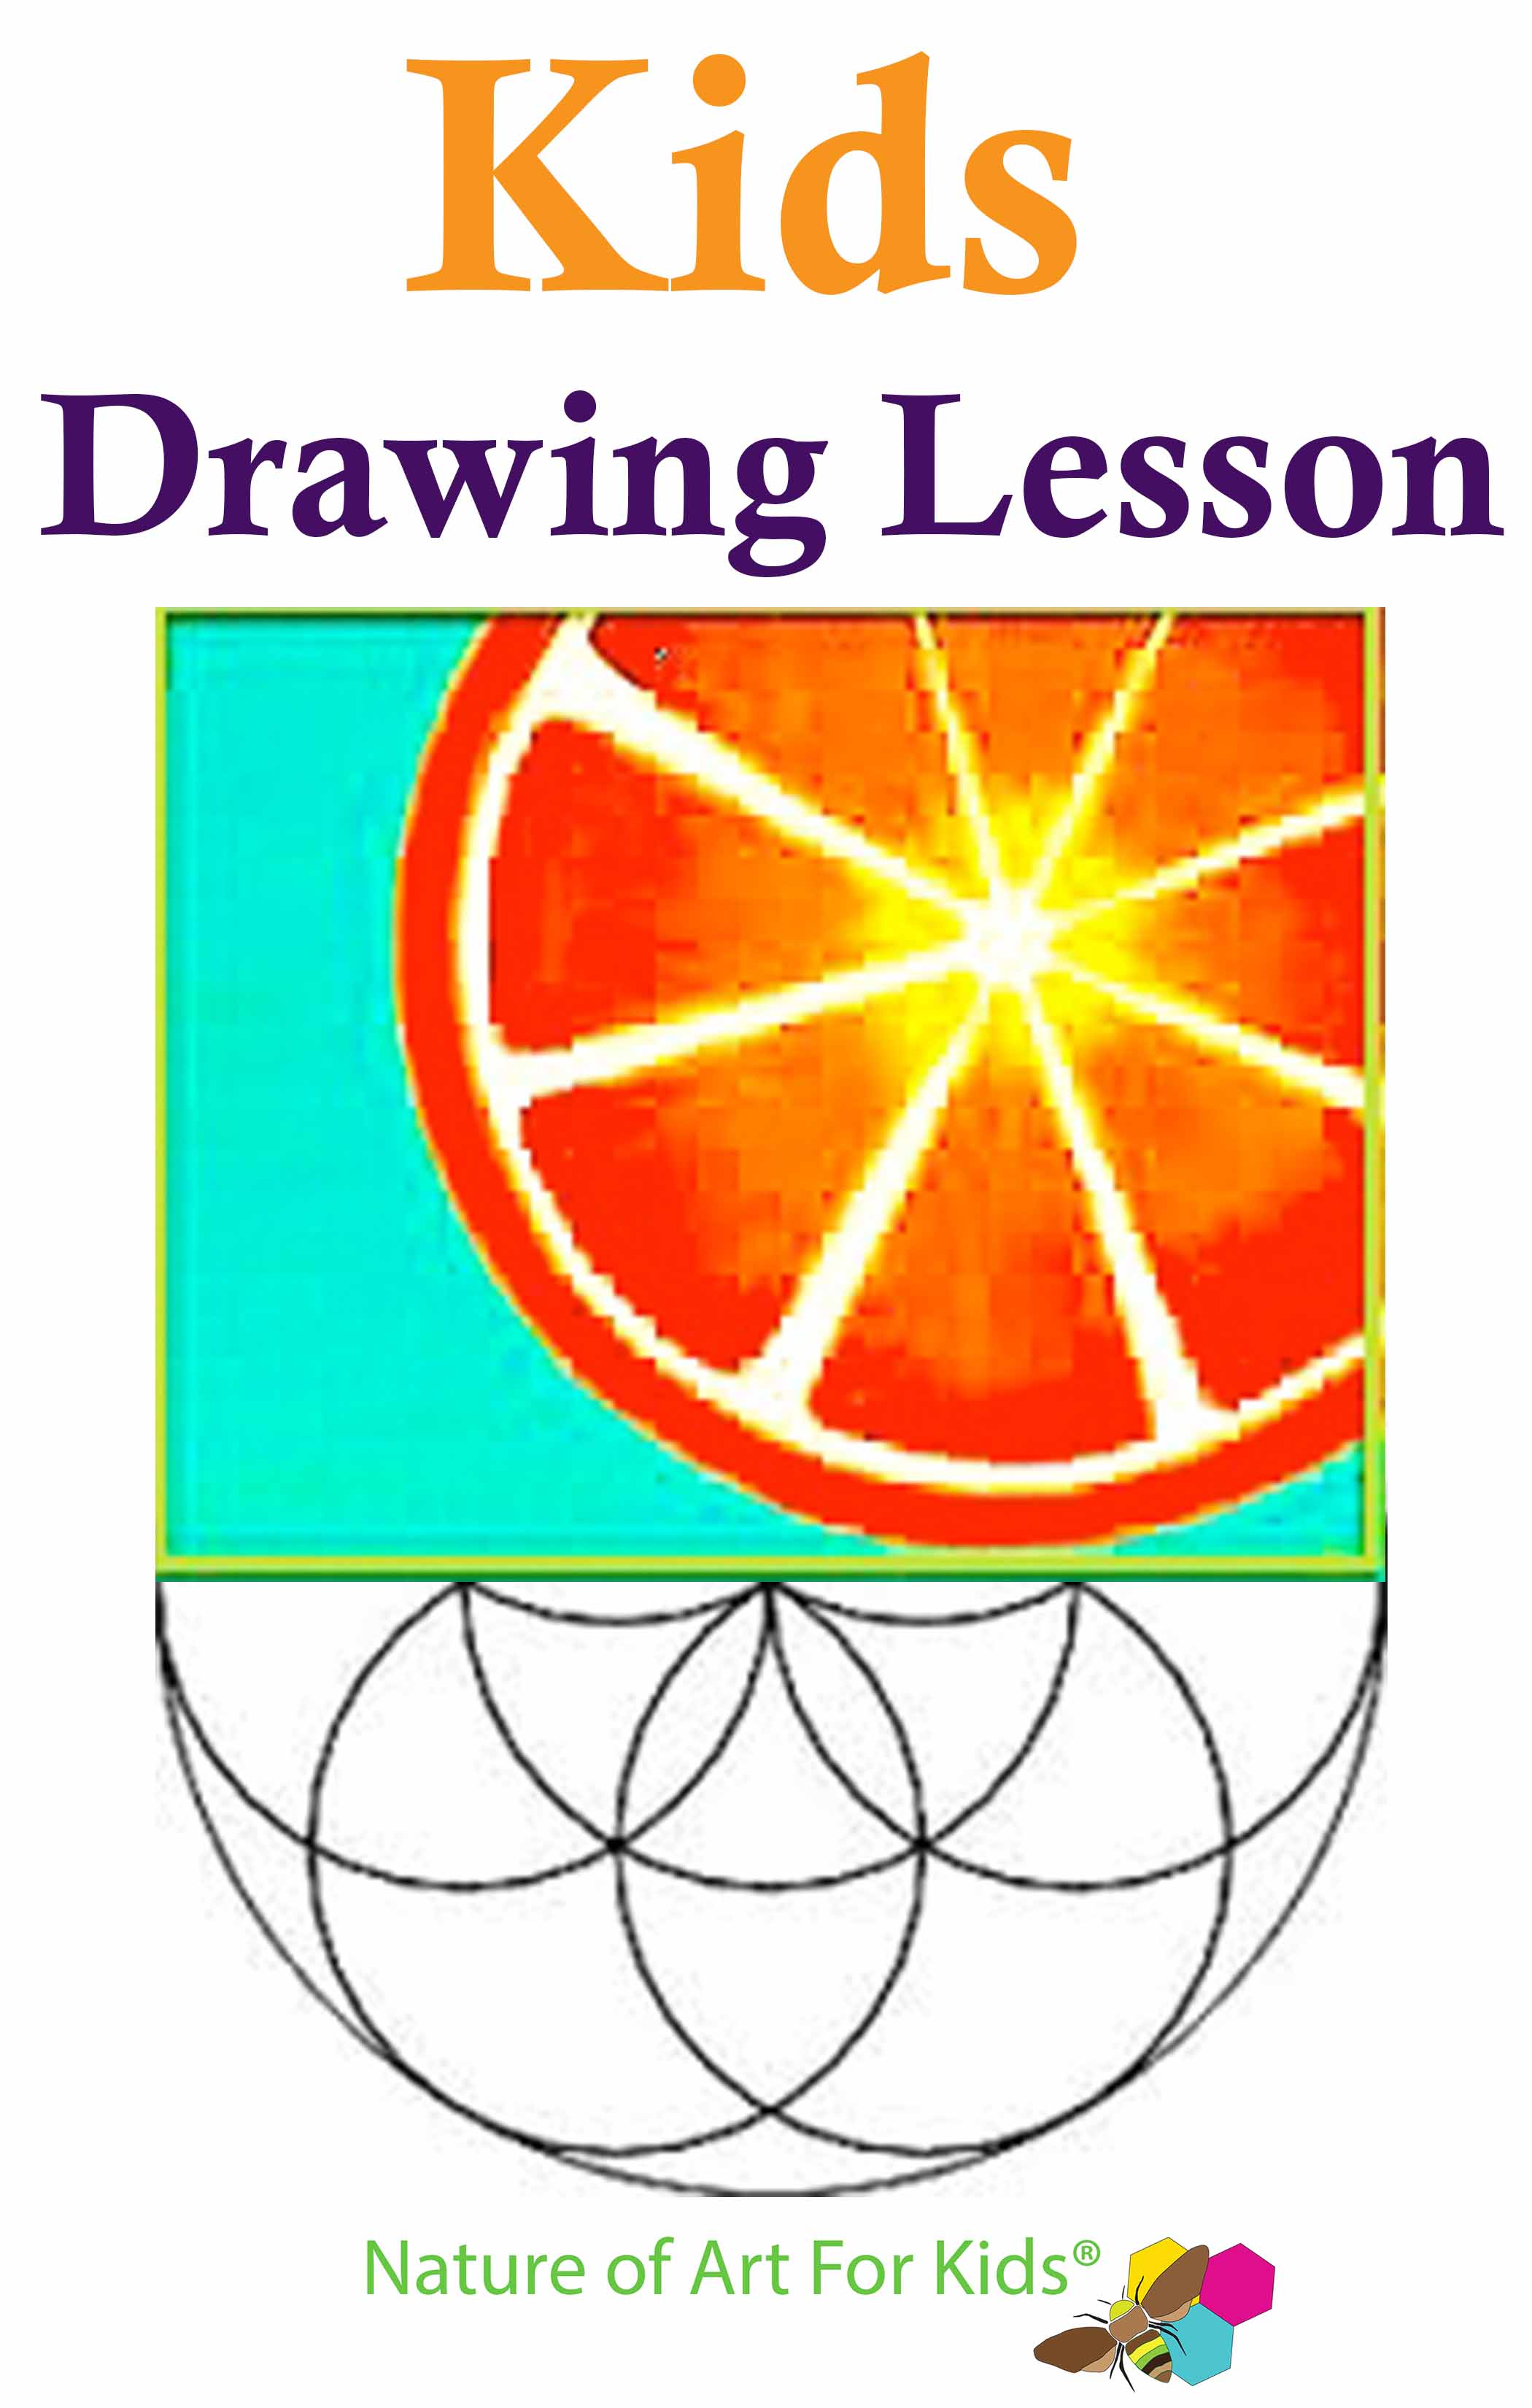 Pencil Drawing Kit [FREE NATURE DRAWING LESSON]